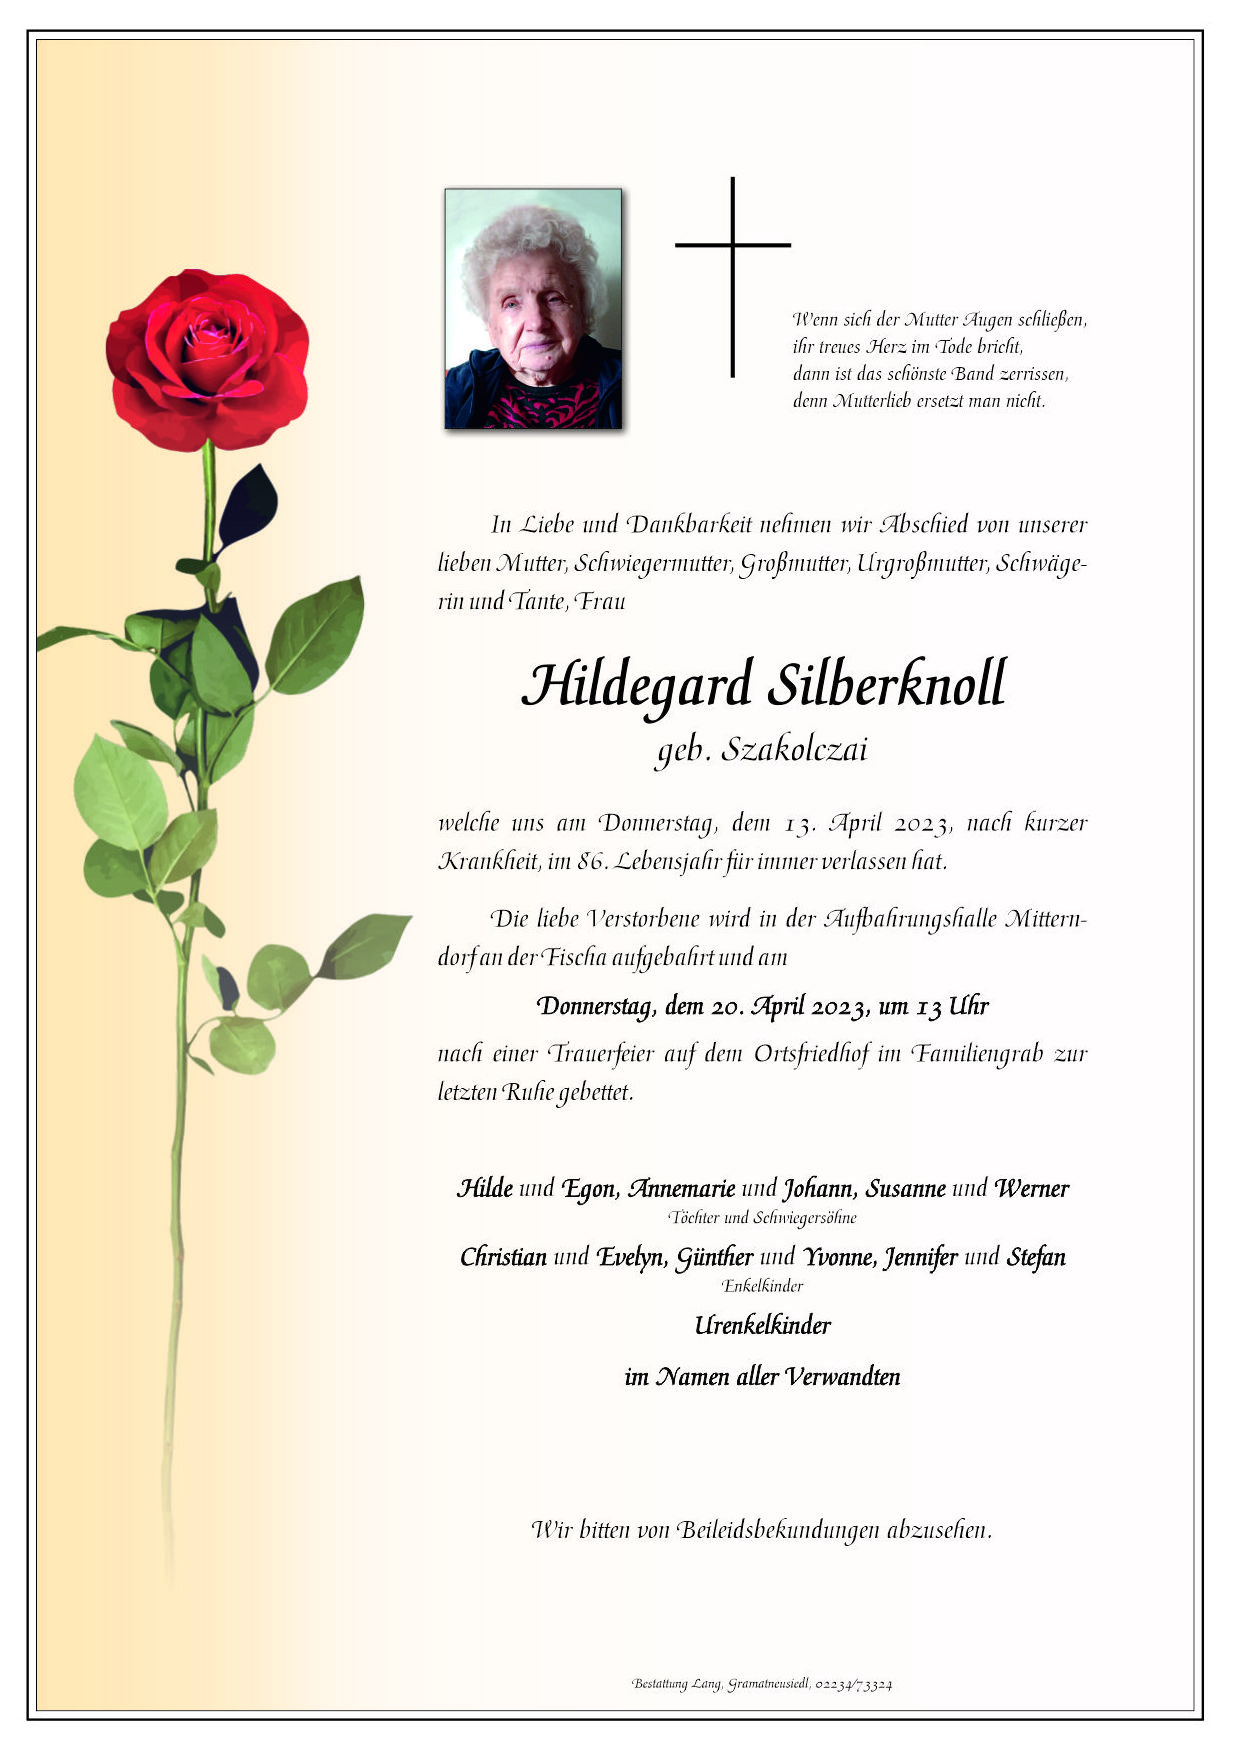 Hildegard Silberknoll